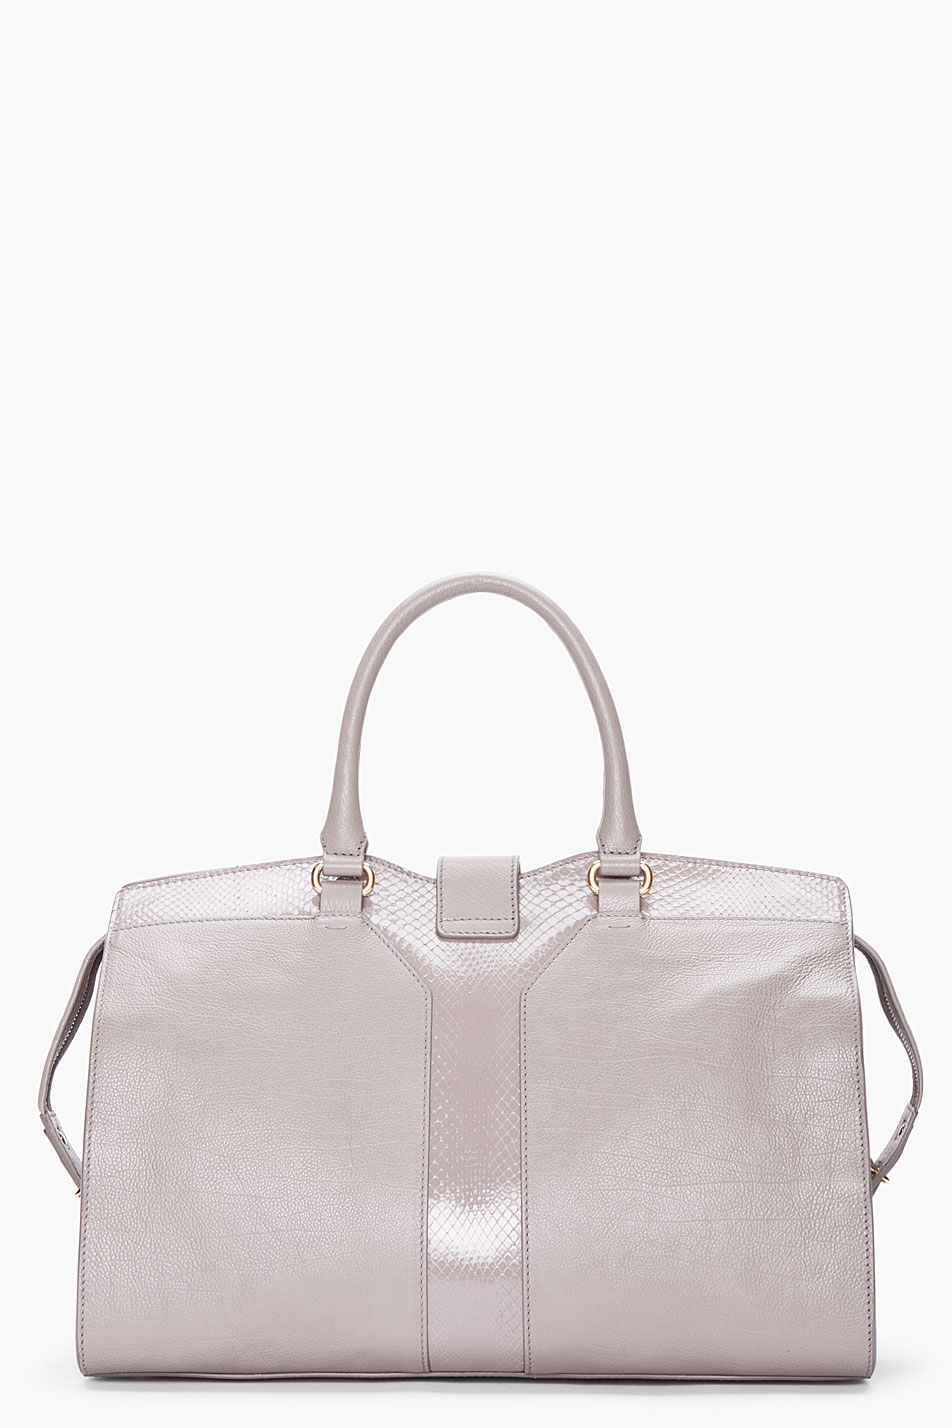 ysl grey exotic leathers handbag  